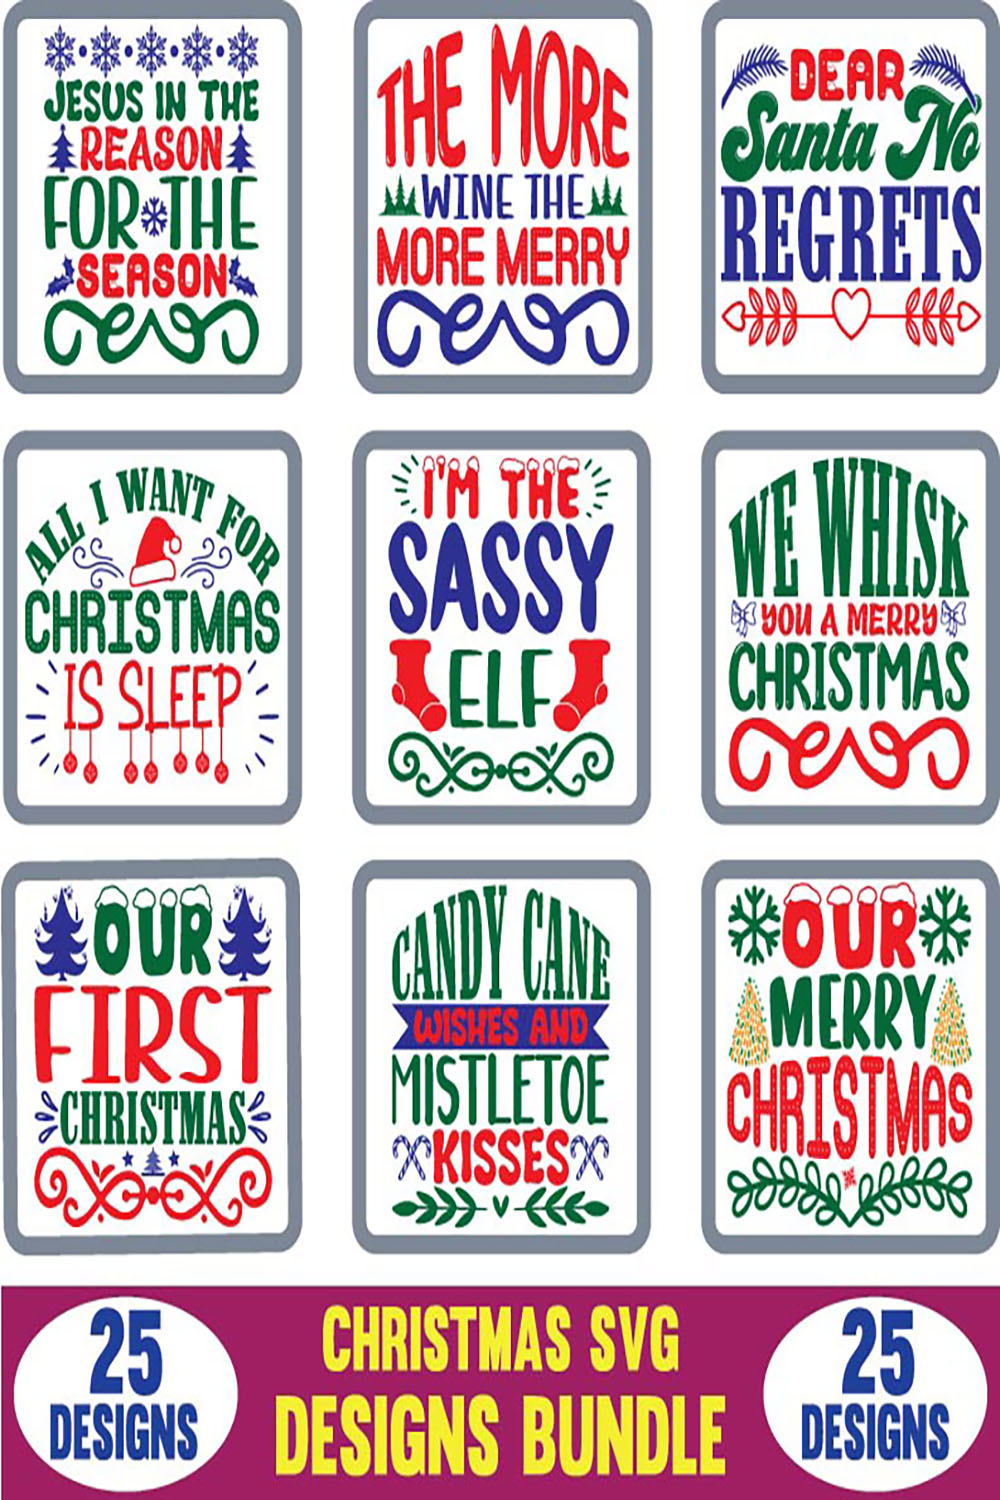 Christmas SVG Designs Bundle - Pinterest.